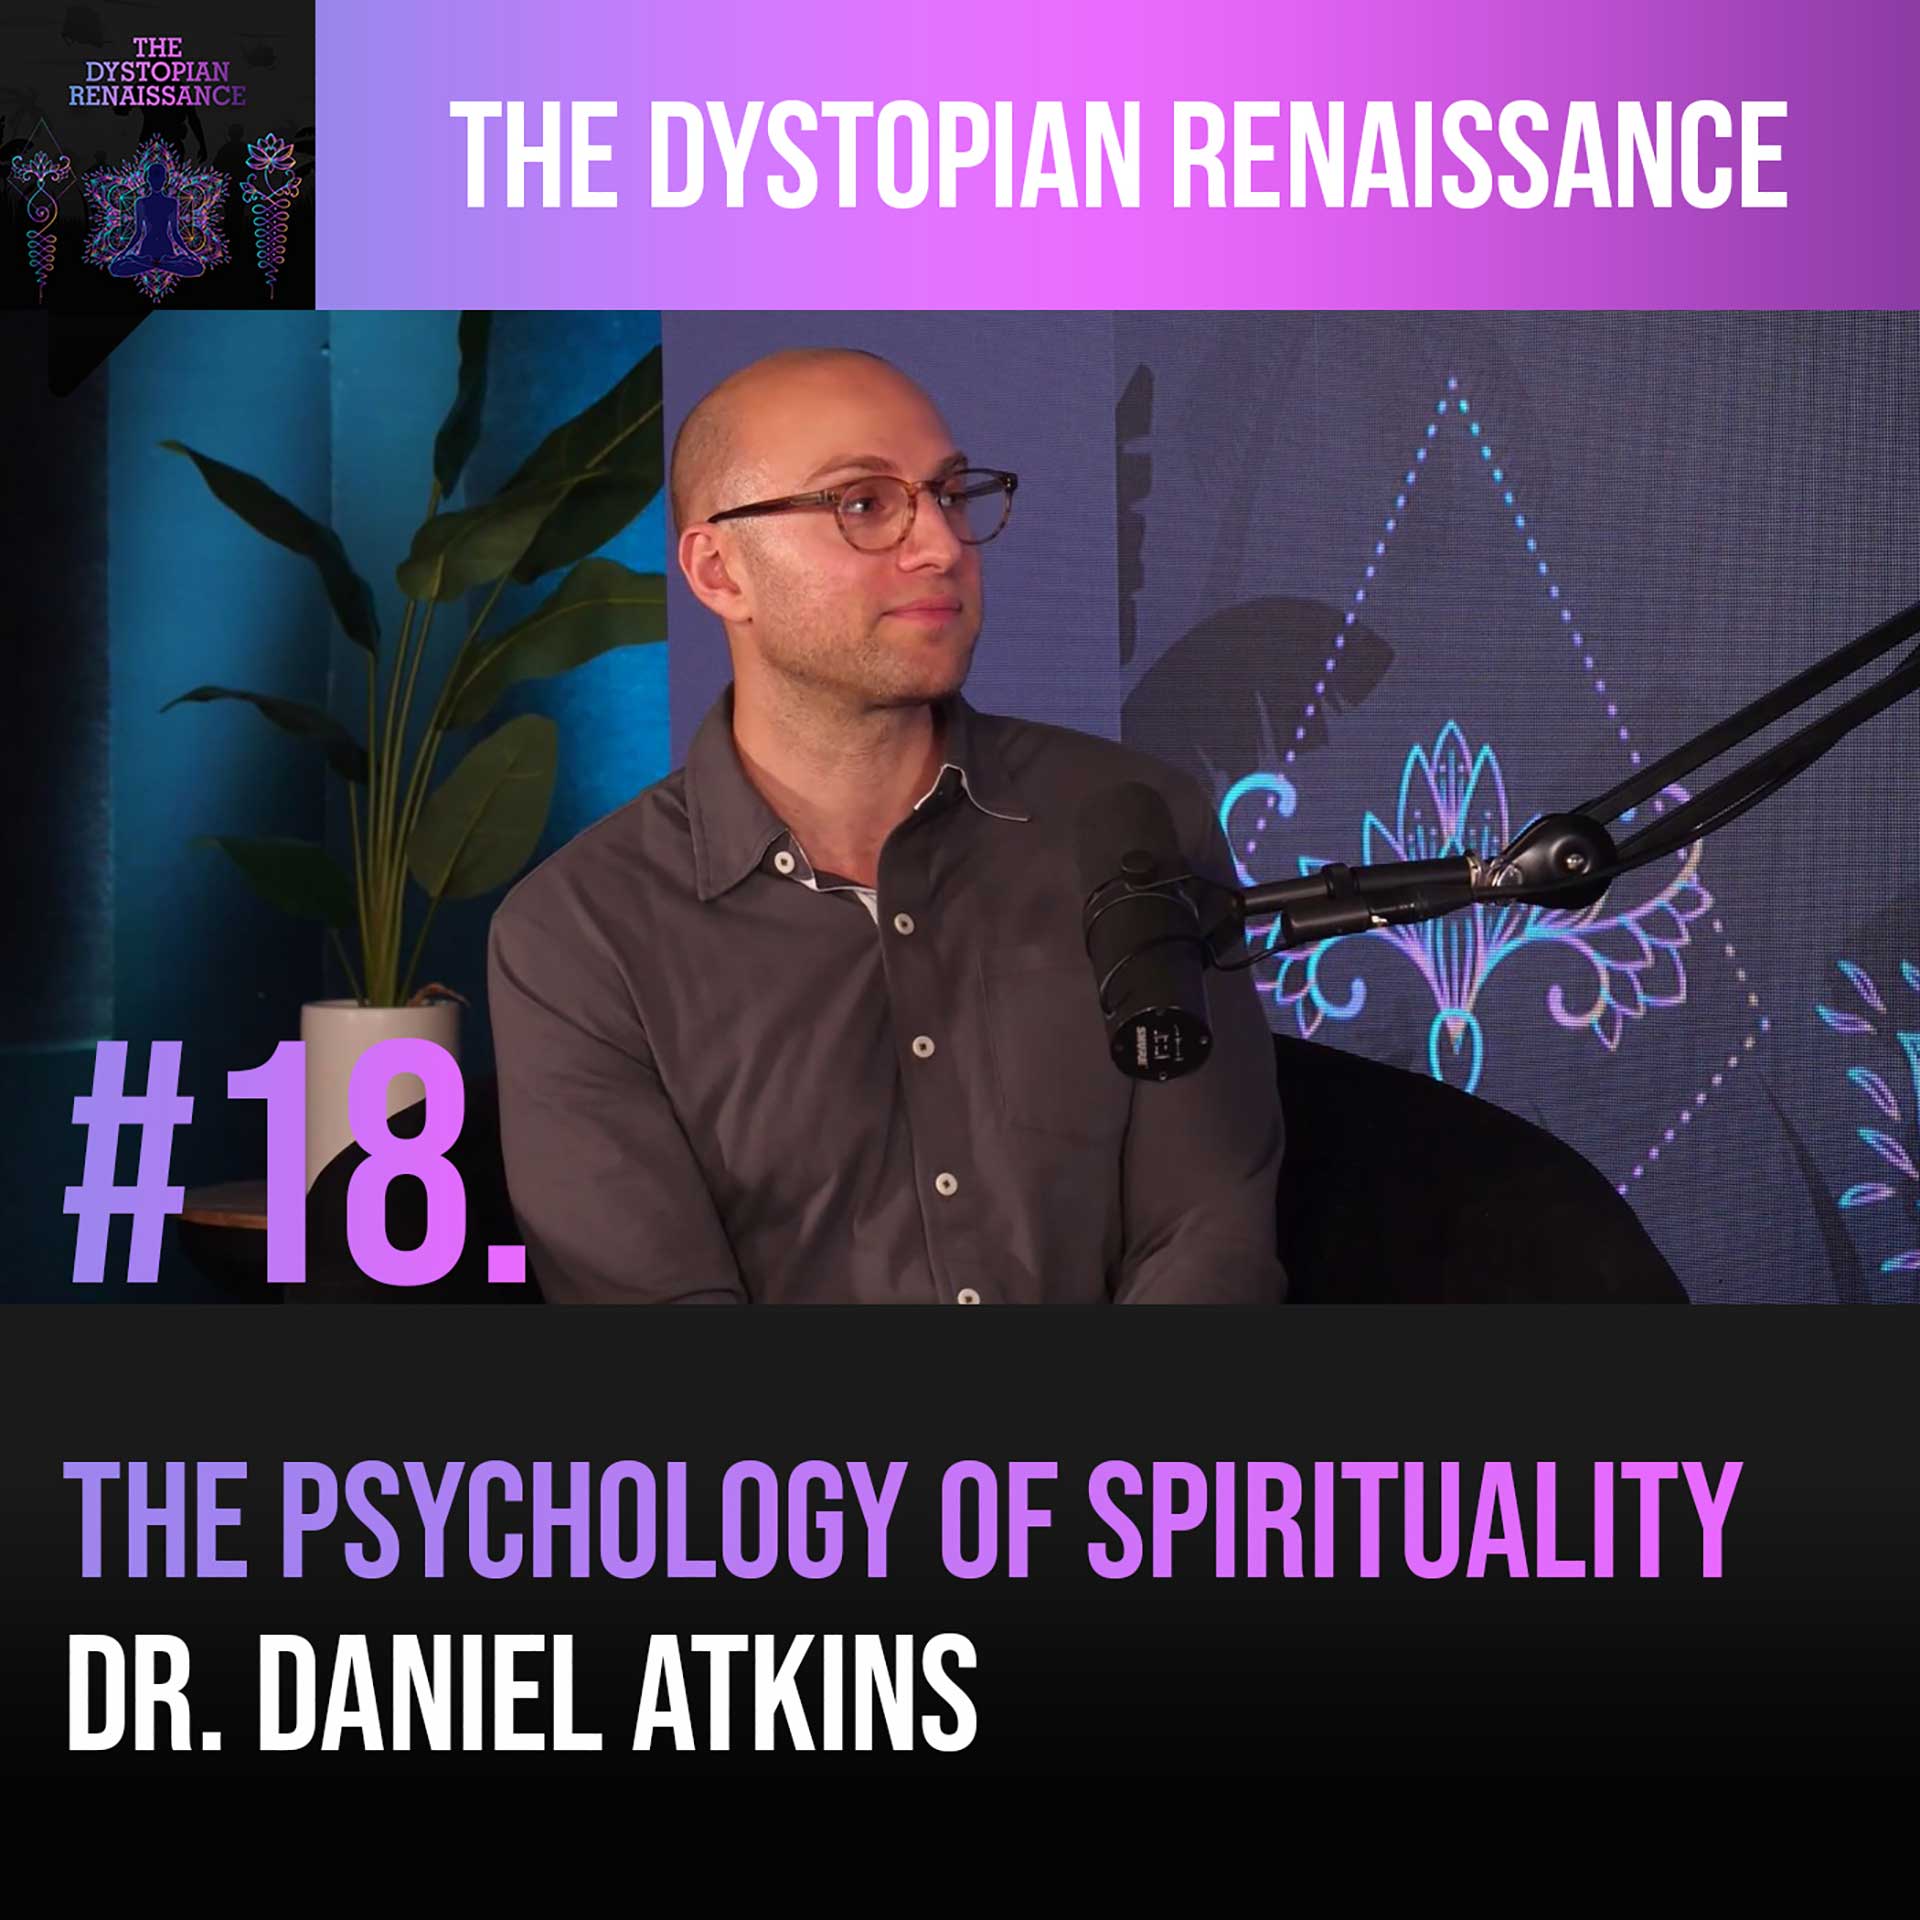 The Psychology of Spirituality